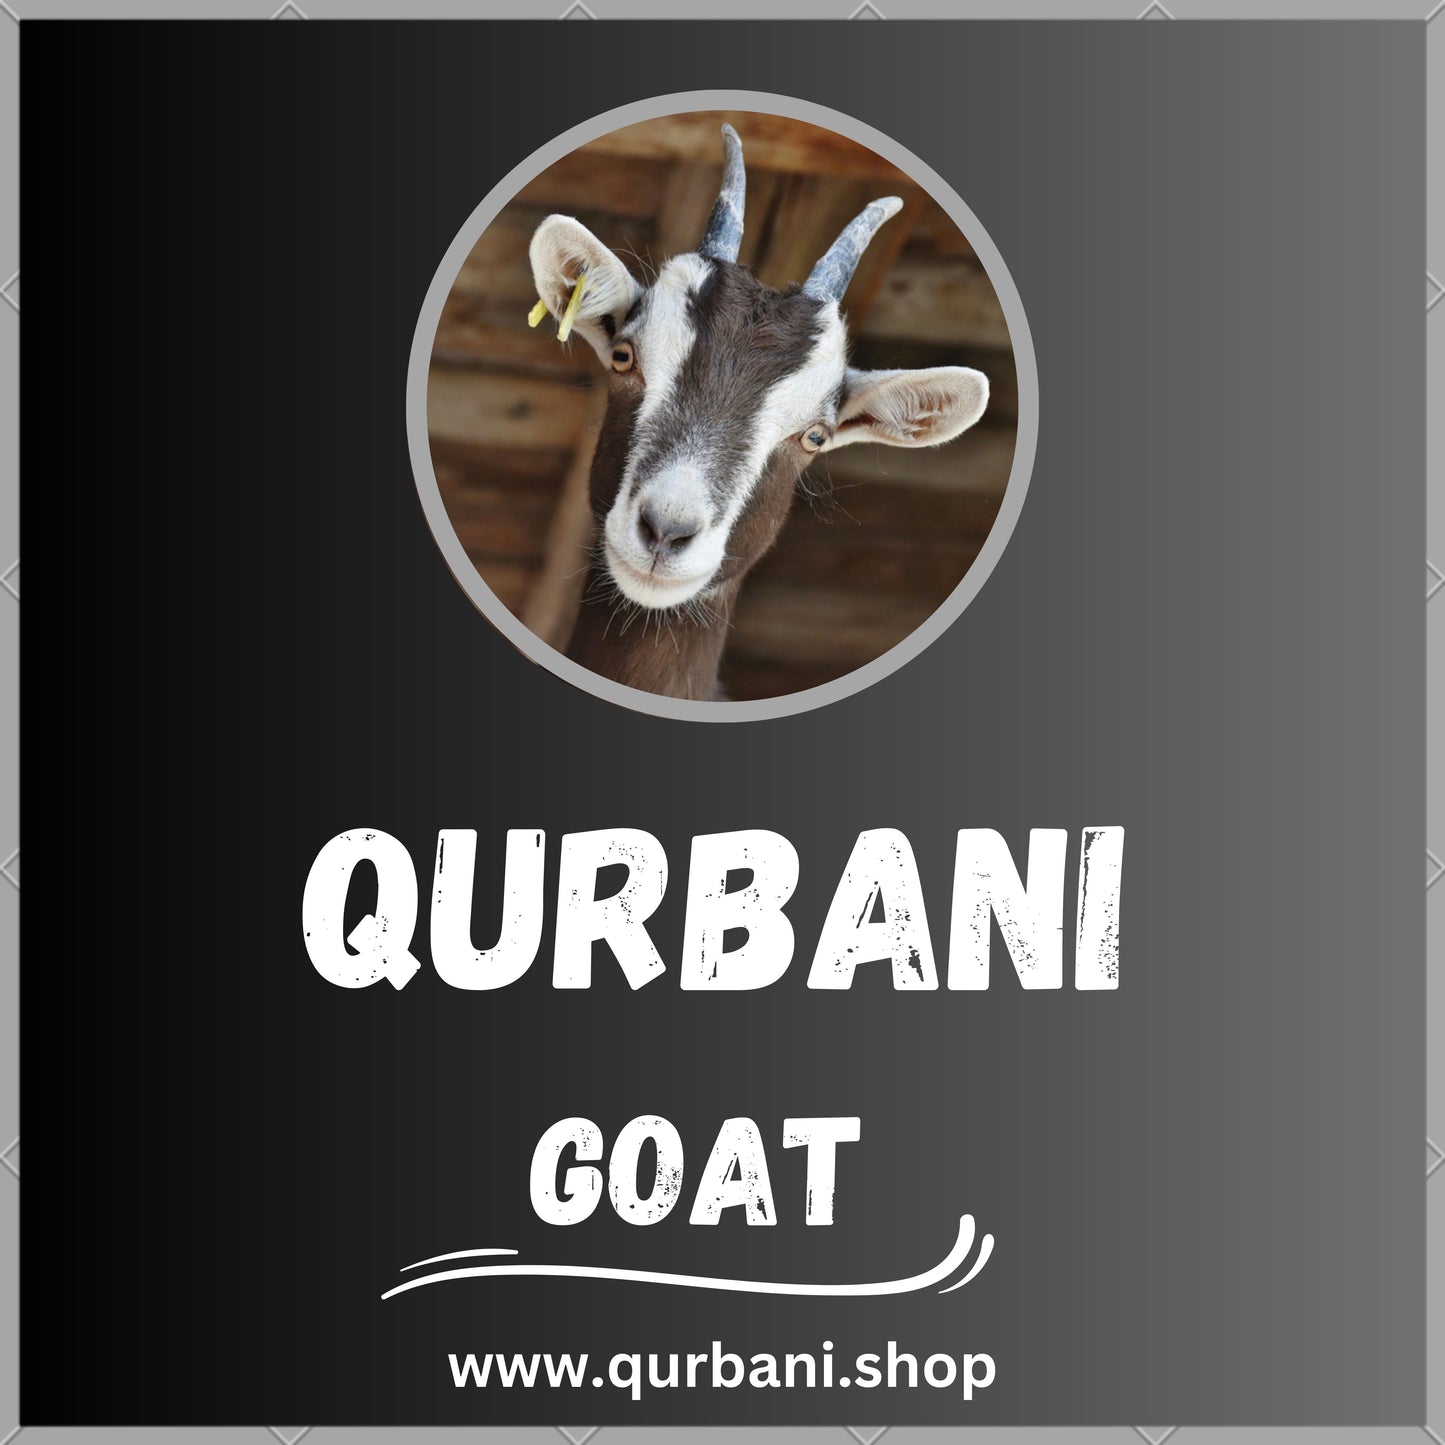 Perform Qurbani in Des Moines - Book Your Eid Sacrifice